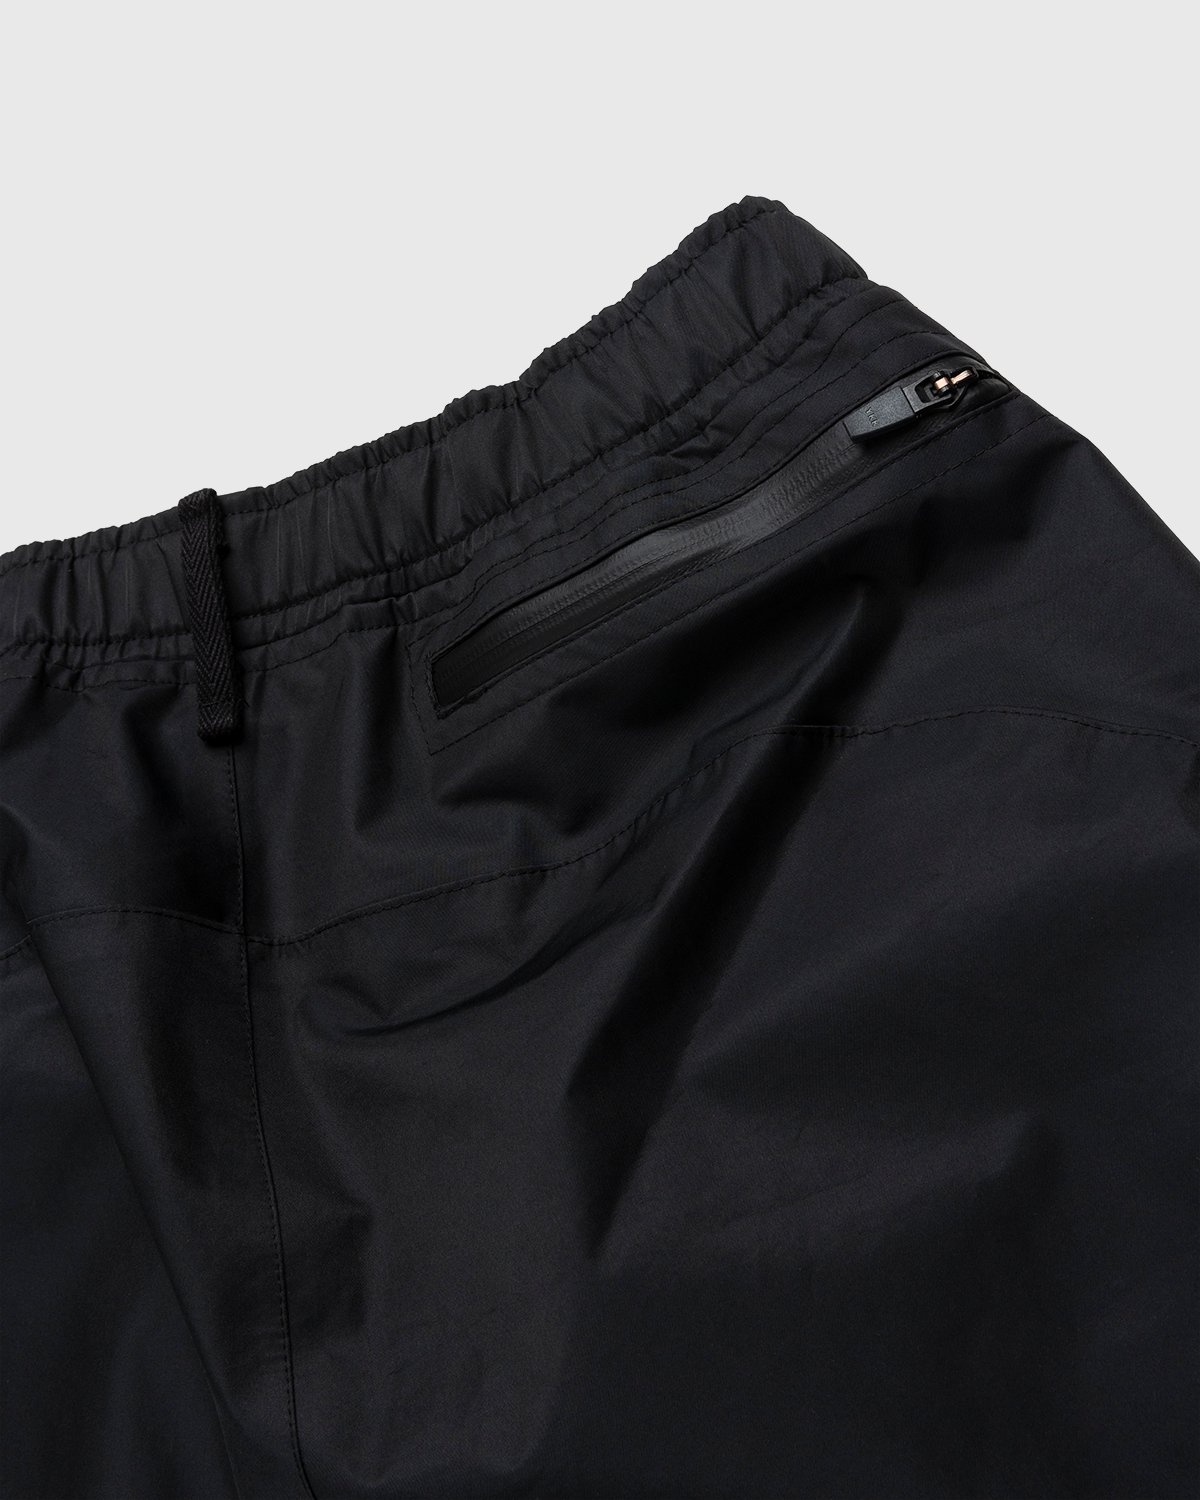 Entire Studios – CMC Trousers Slate Black | Highsnobiety Shop